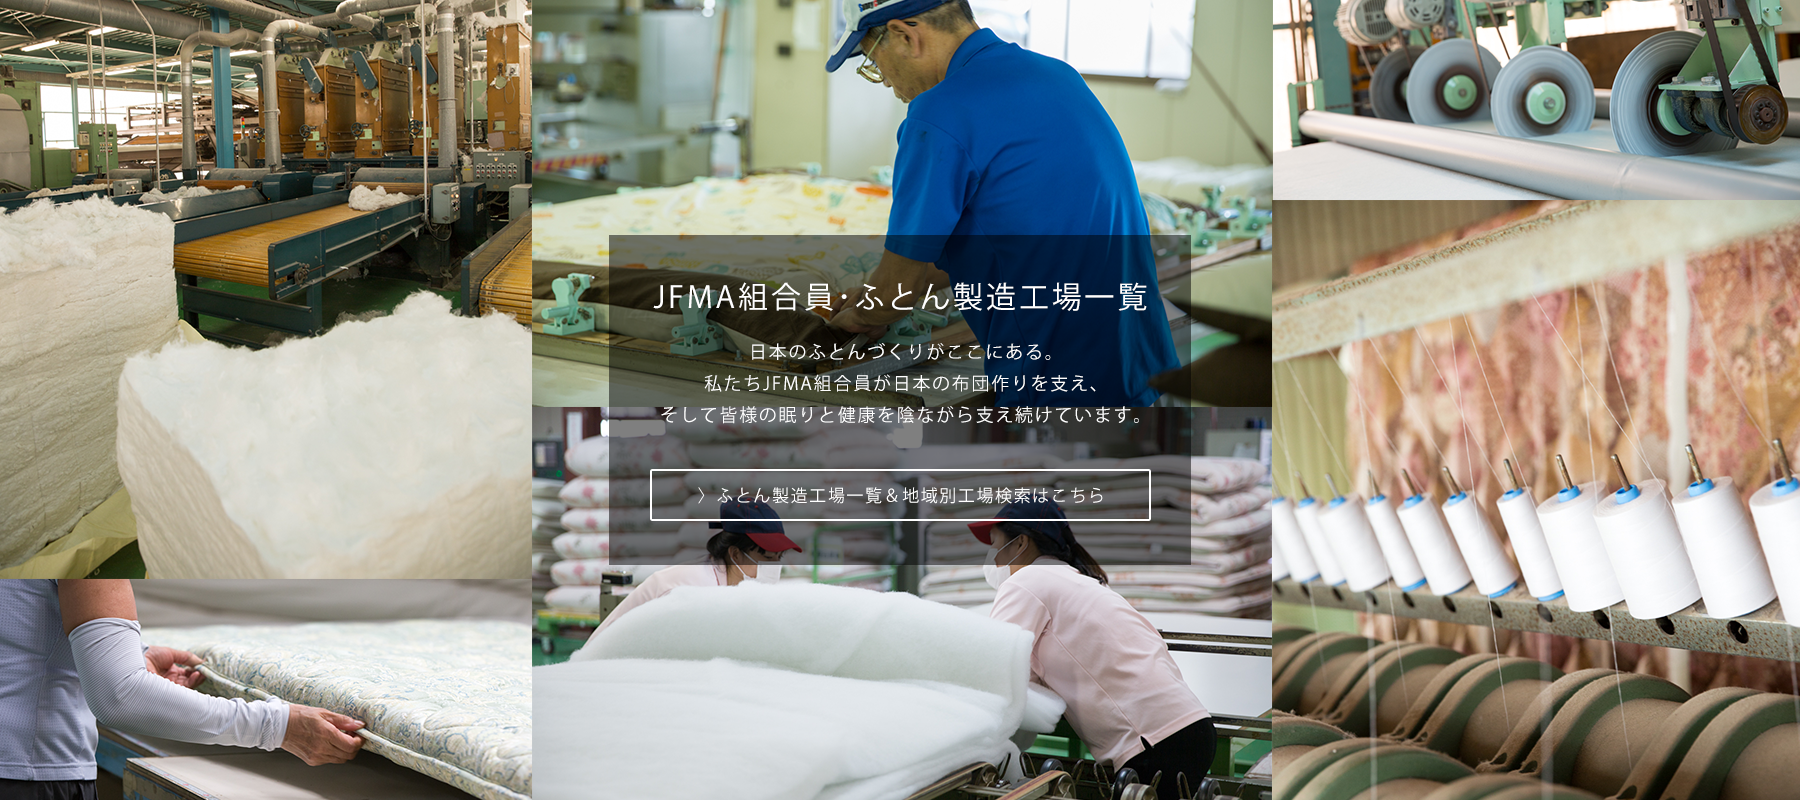 JFMA 組合員・ふとん製造工場一覧